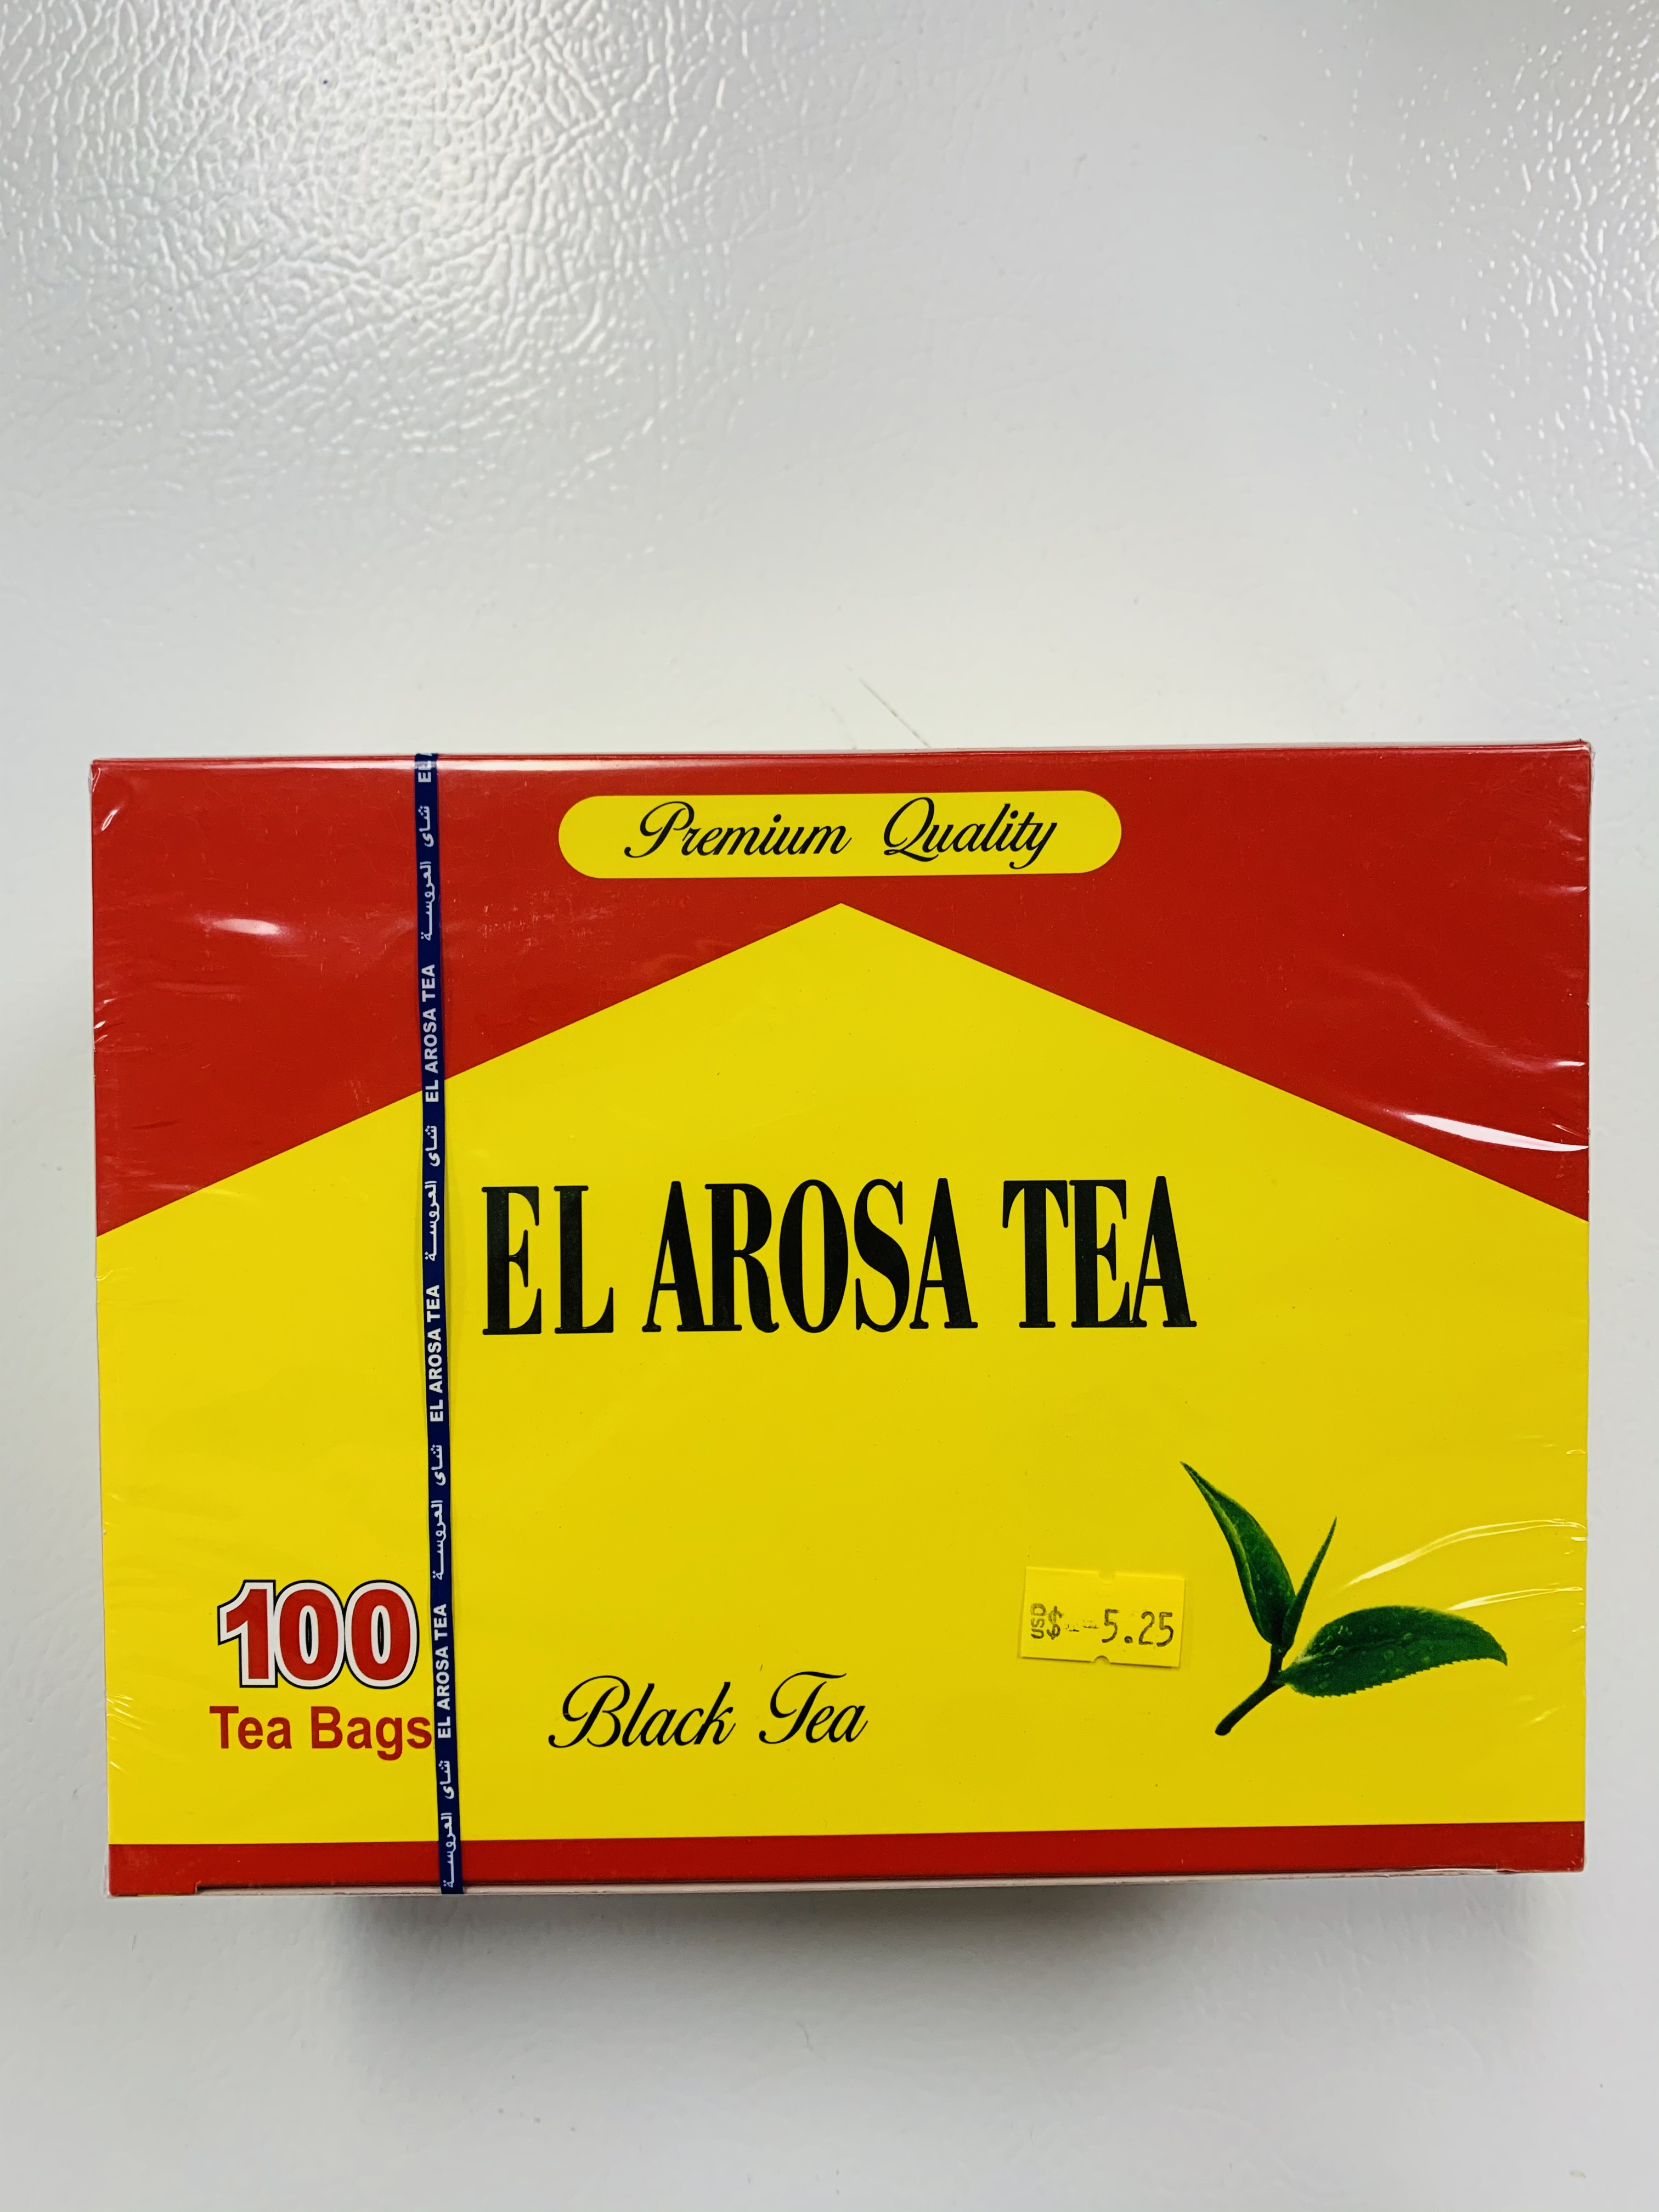 El AROSA TEA <br>5.25$